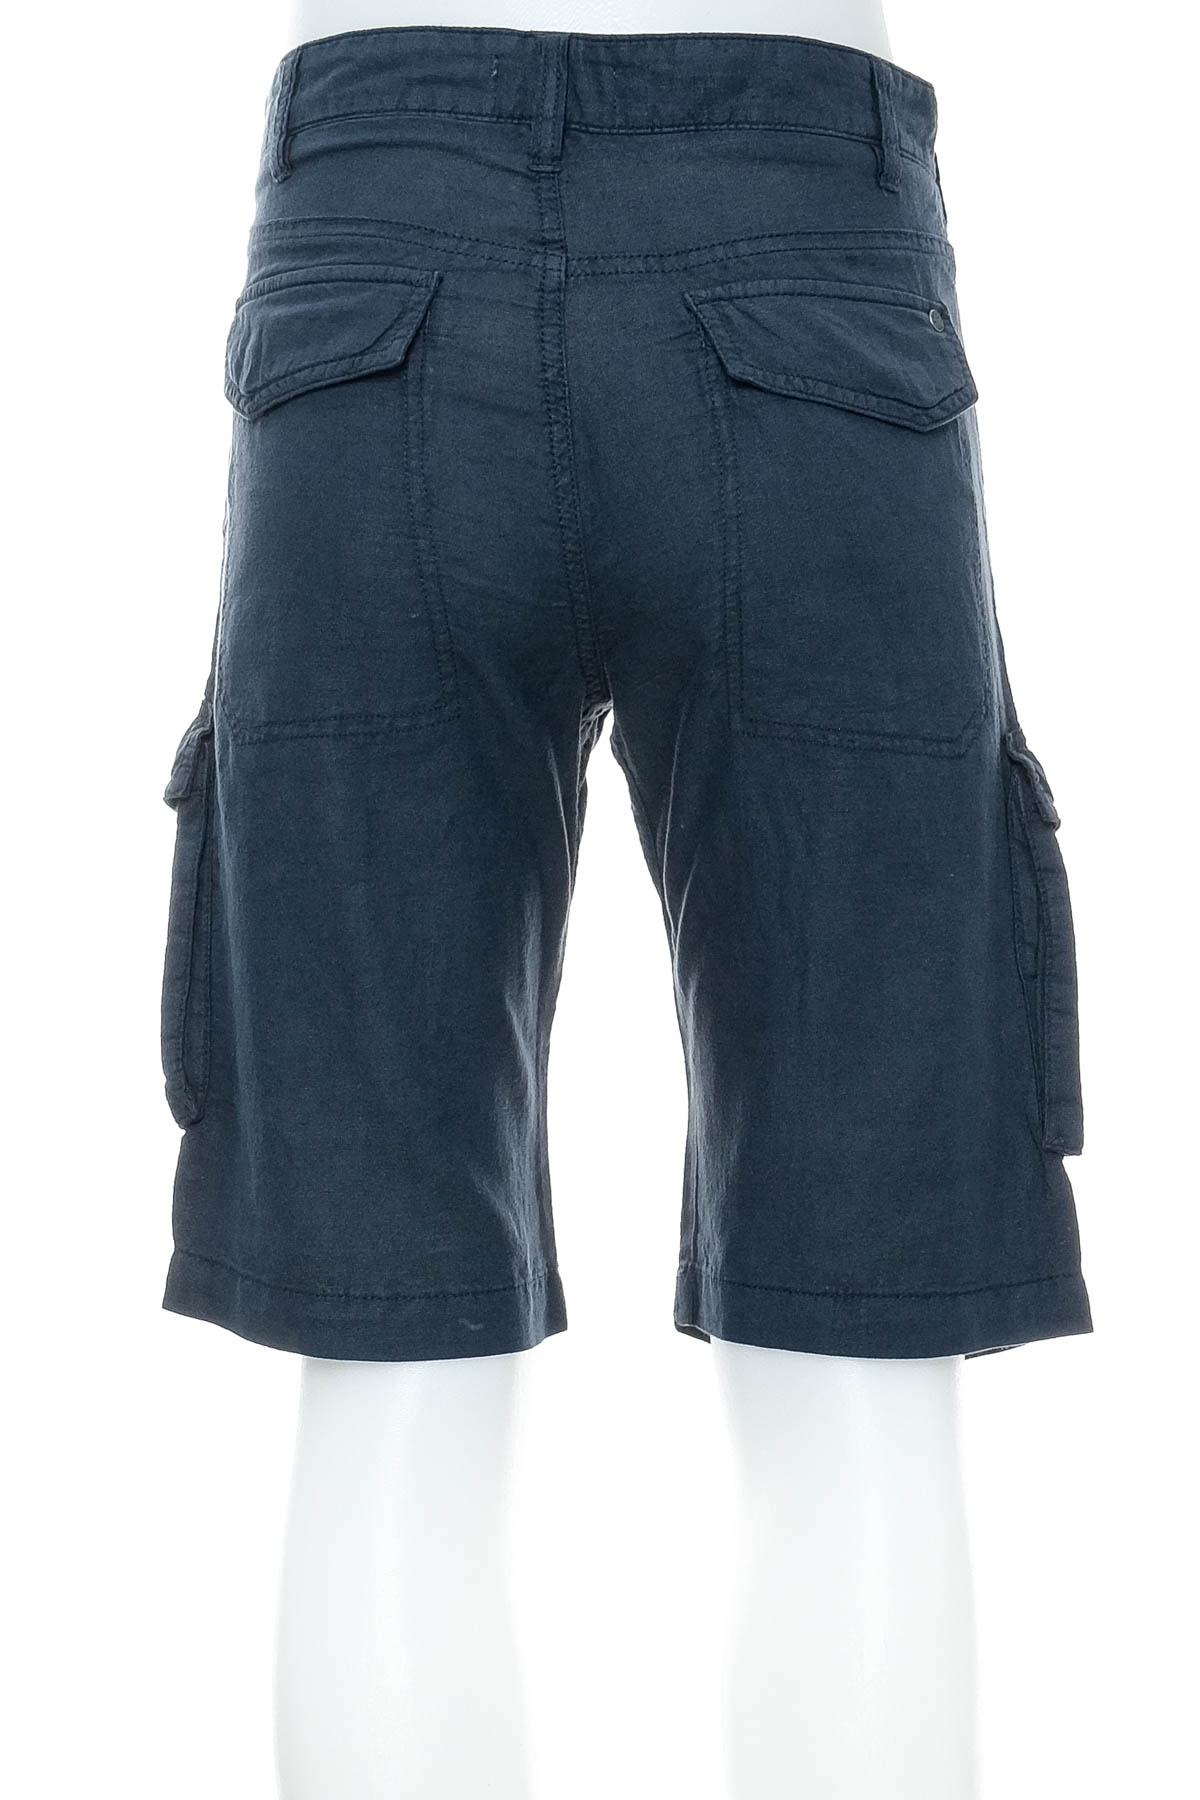 Men's shorts - ! Solid - 1